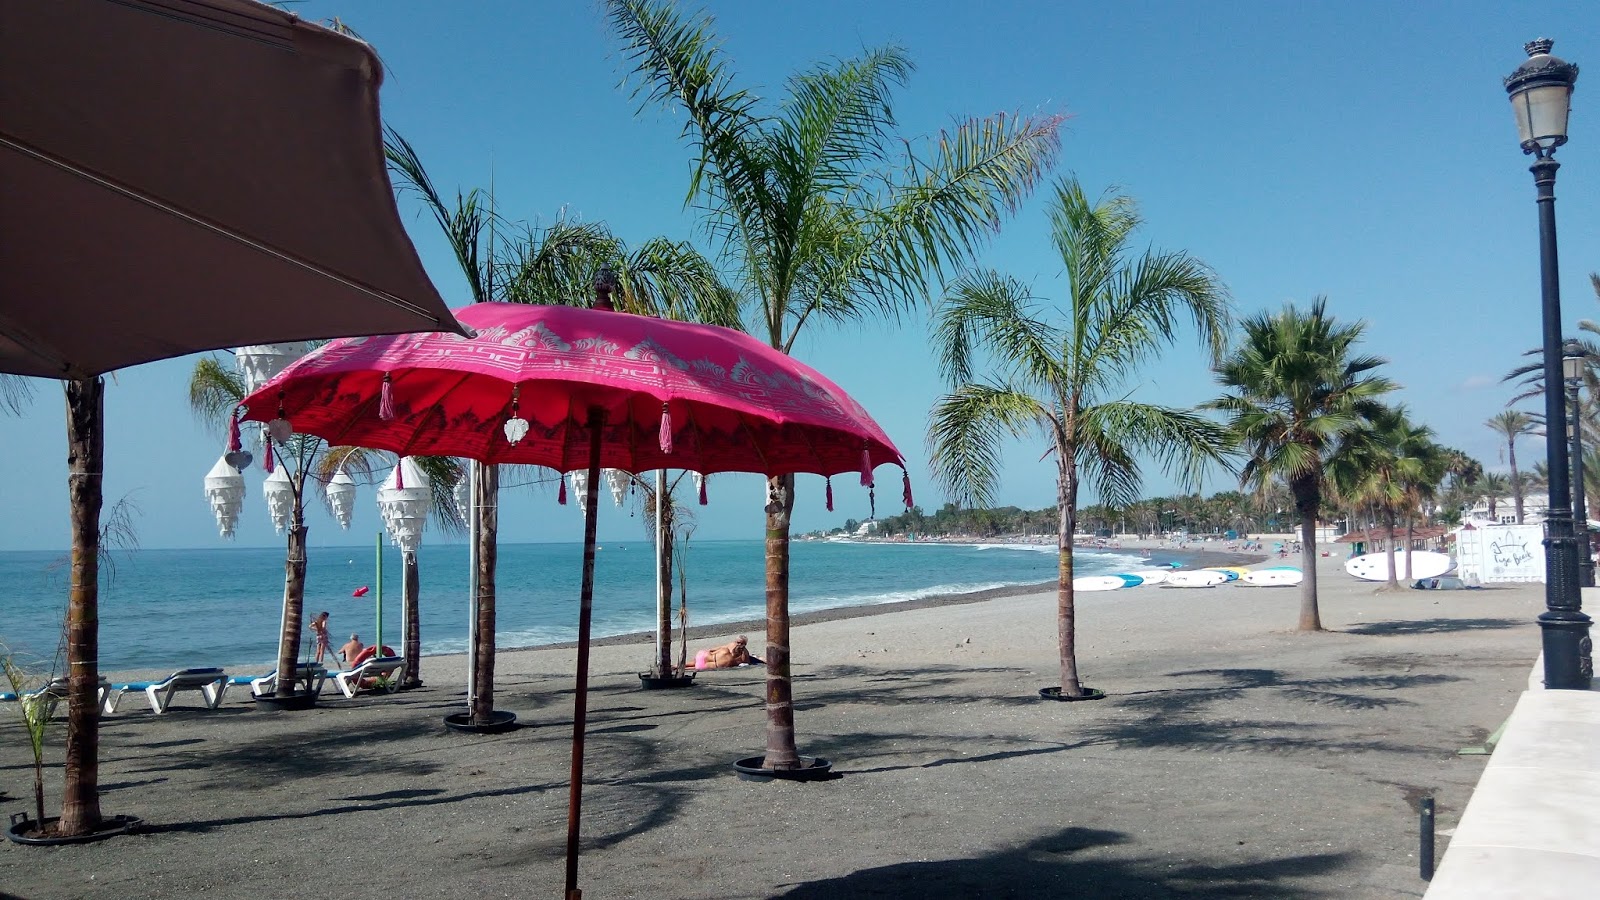 Foto di Playa de San Pedro de Alcantara con una superficie del acqua cristallina